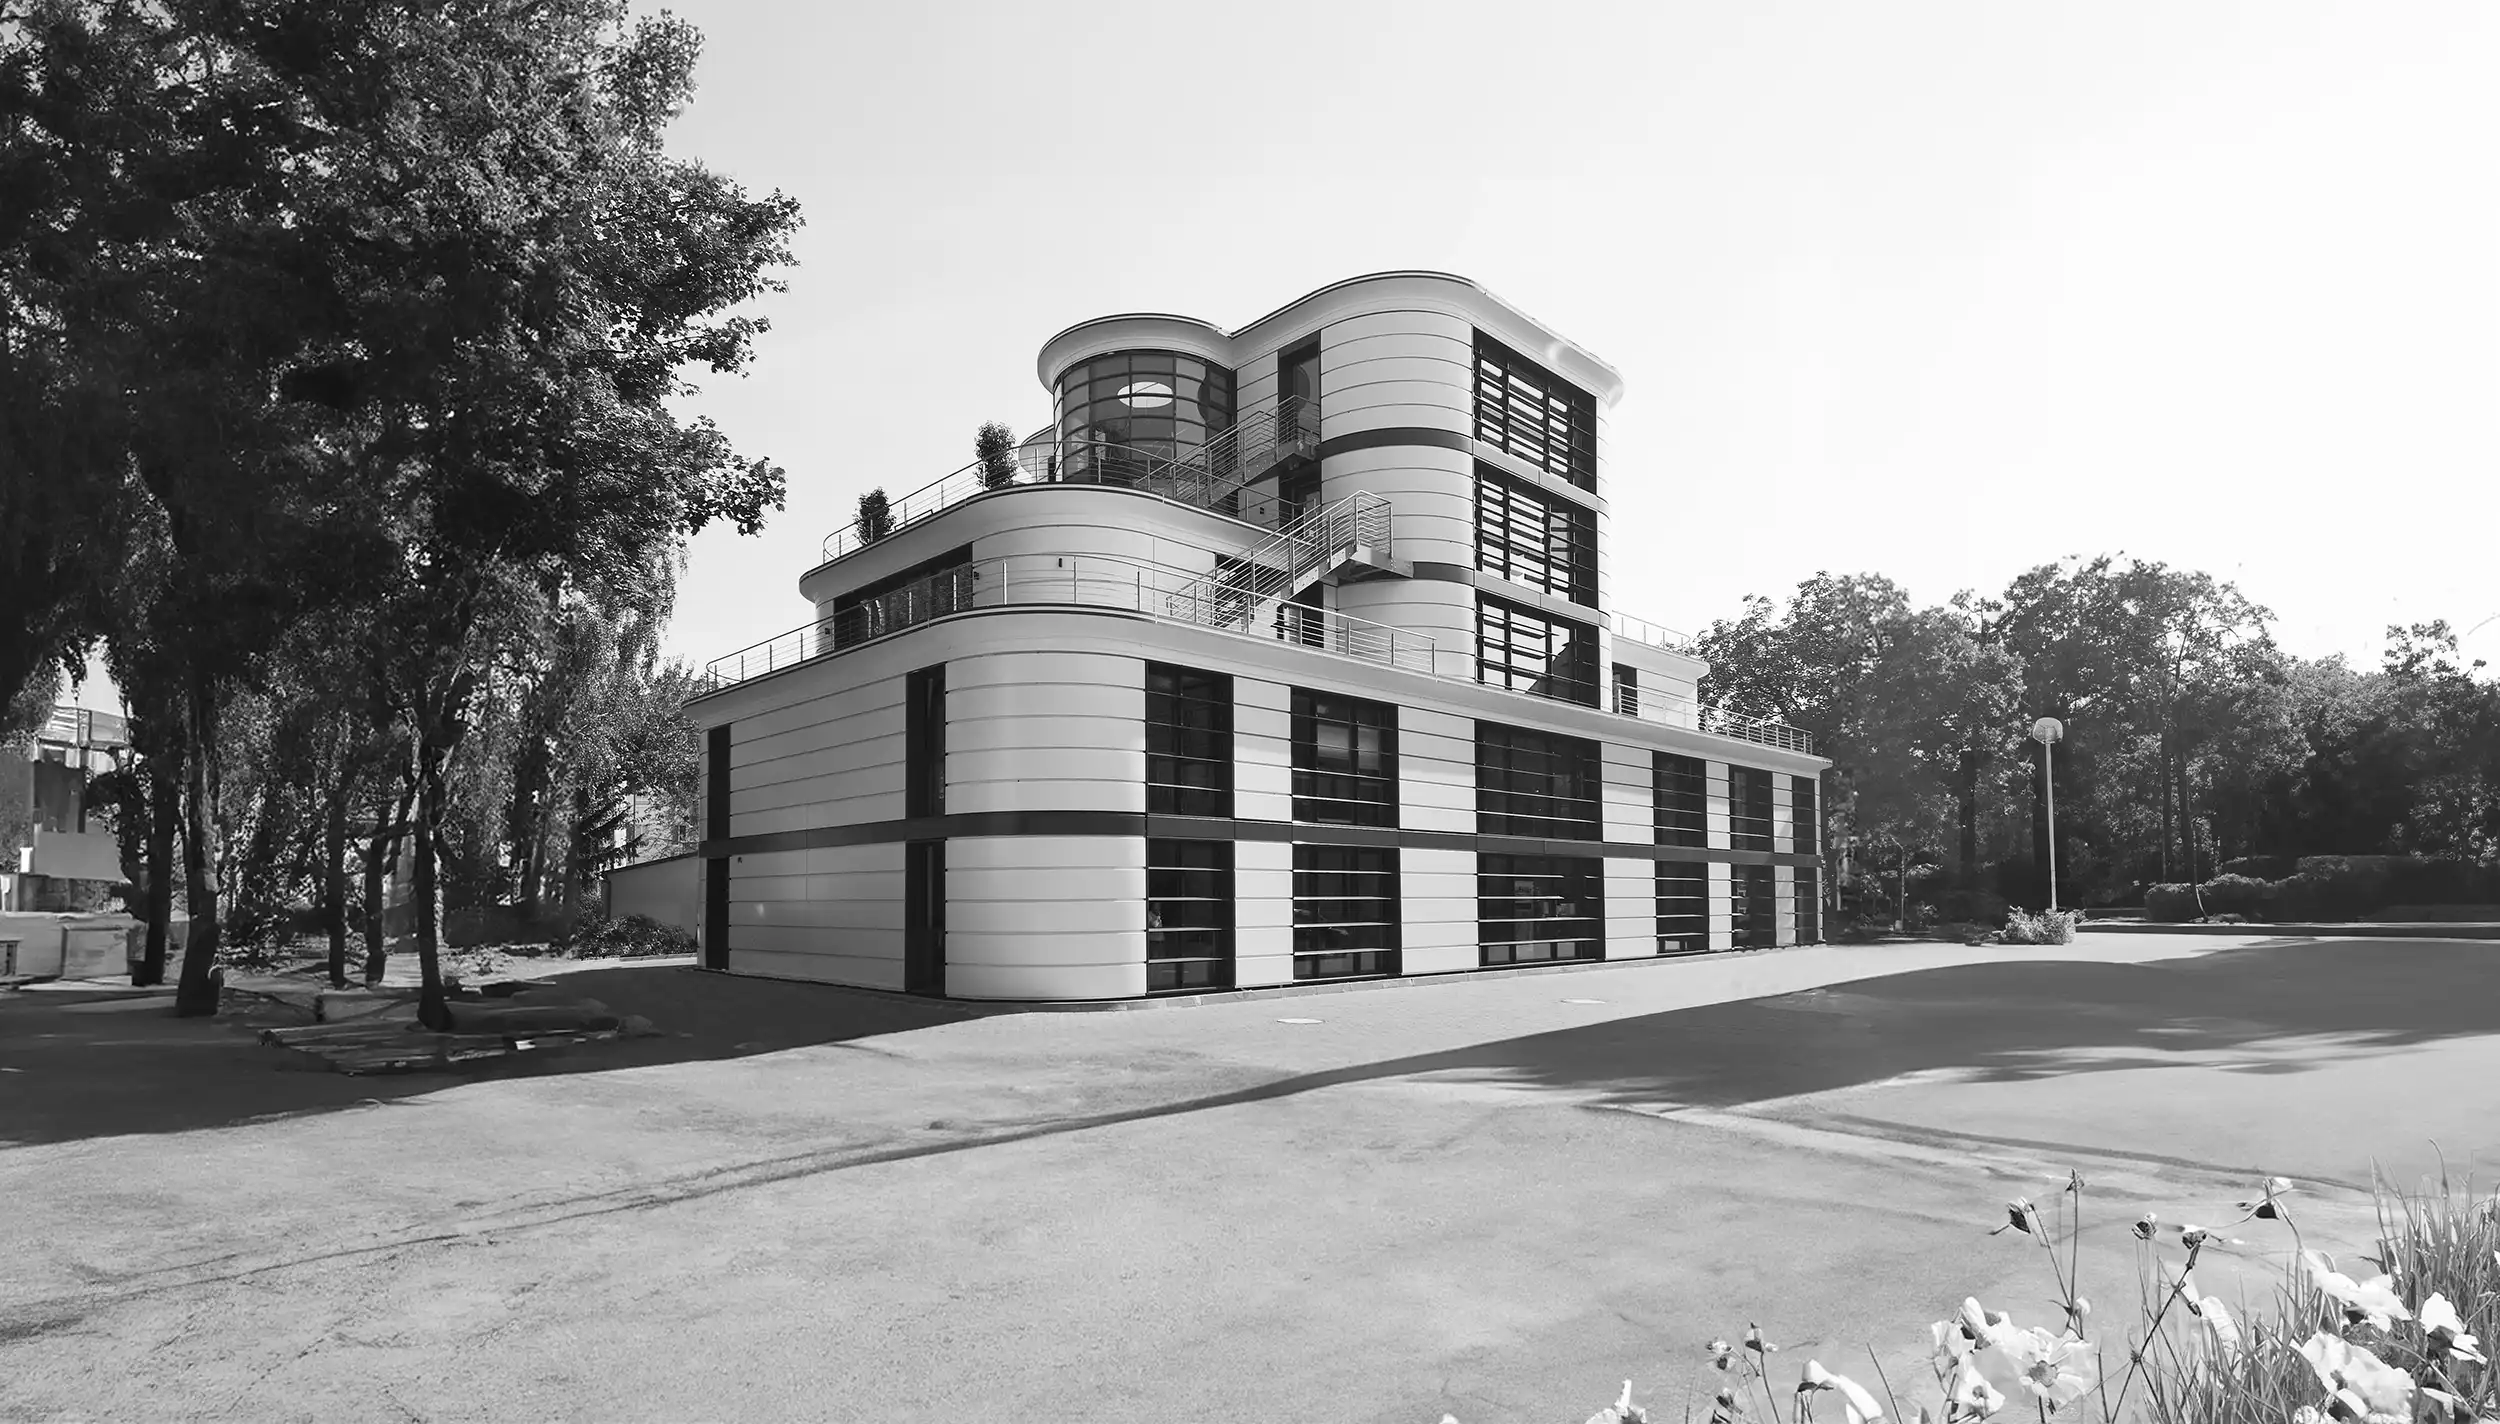 Villa - Architekt Siemonsen - Hamburg